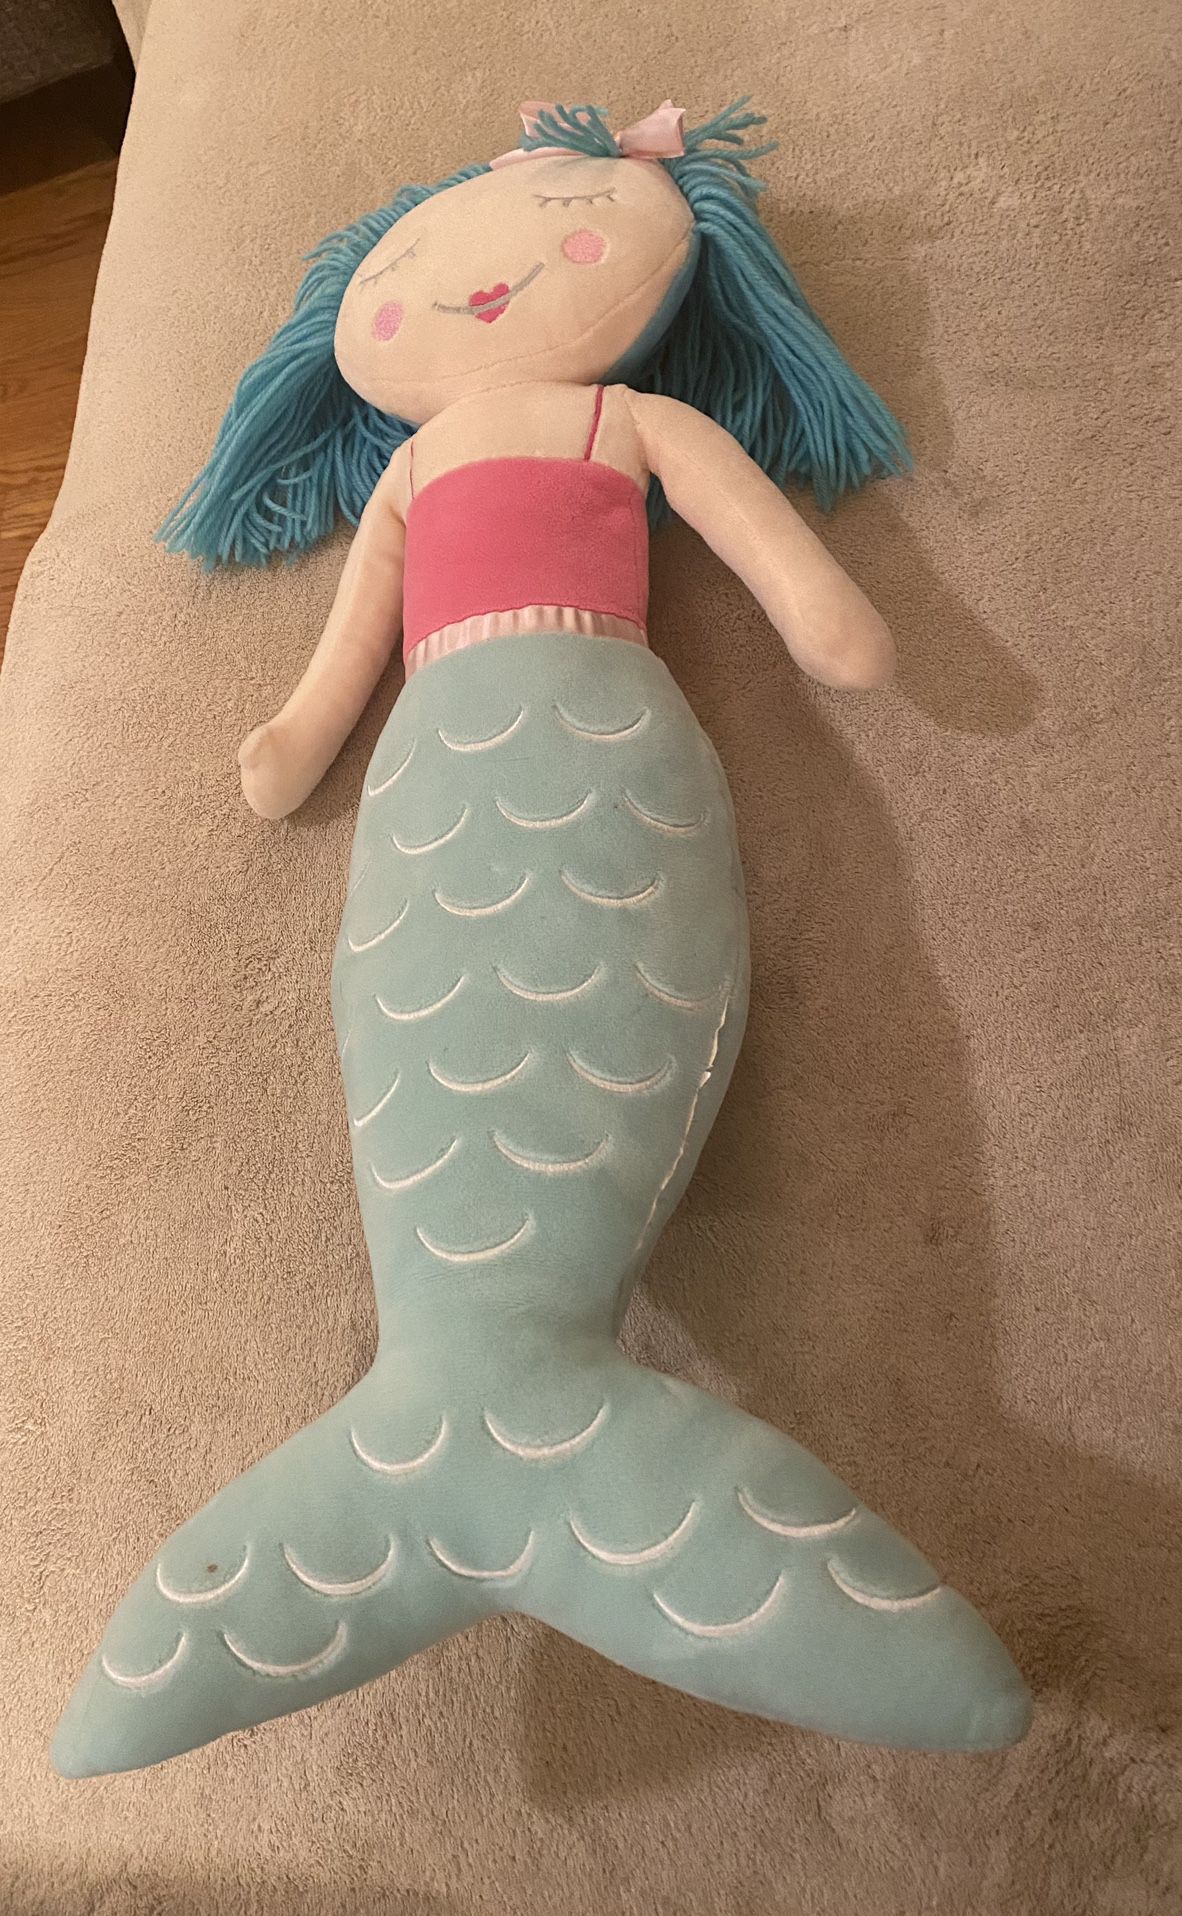 Plush Mermaid ‘Pillow’